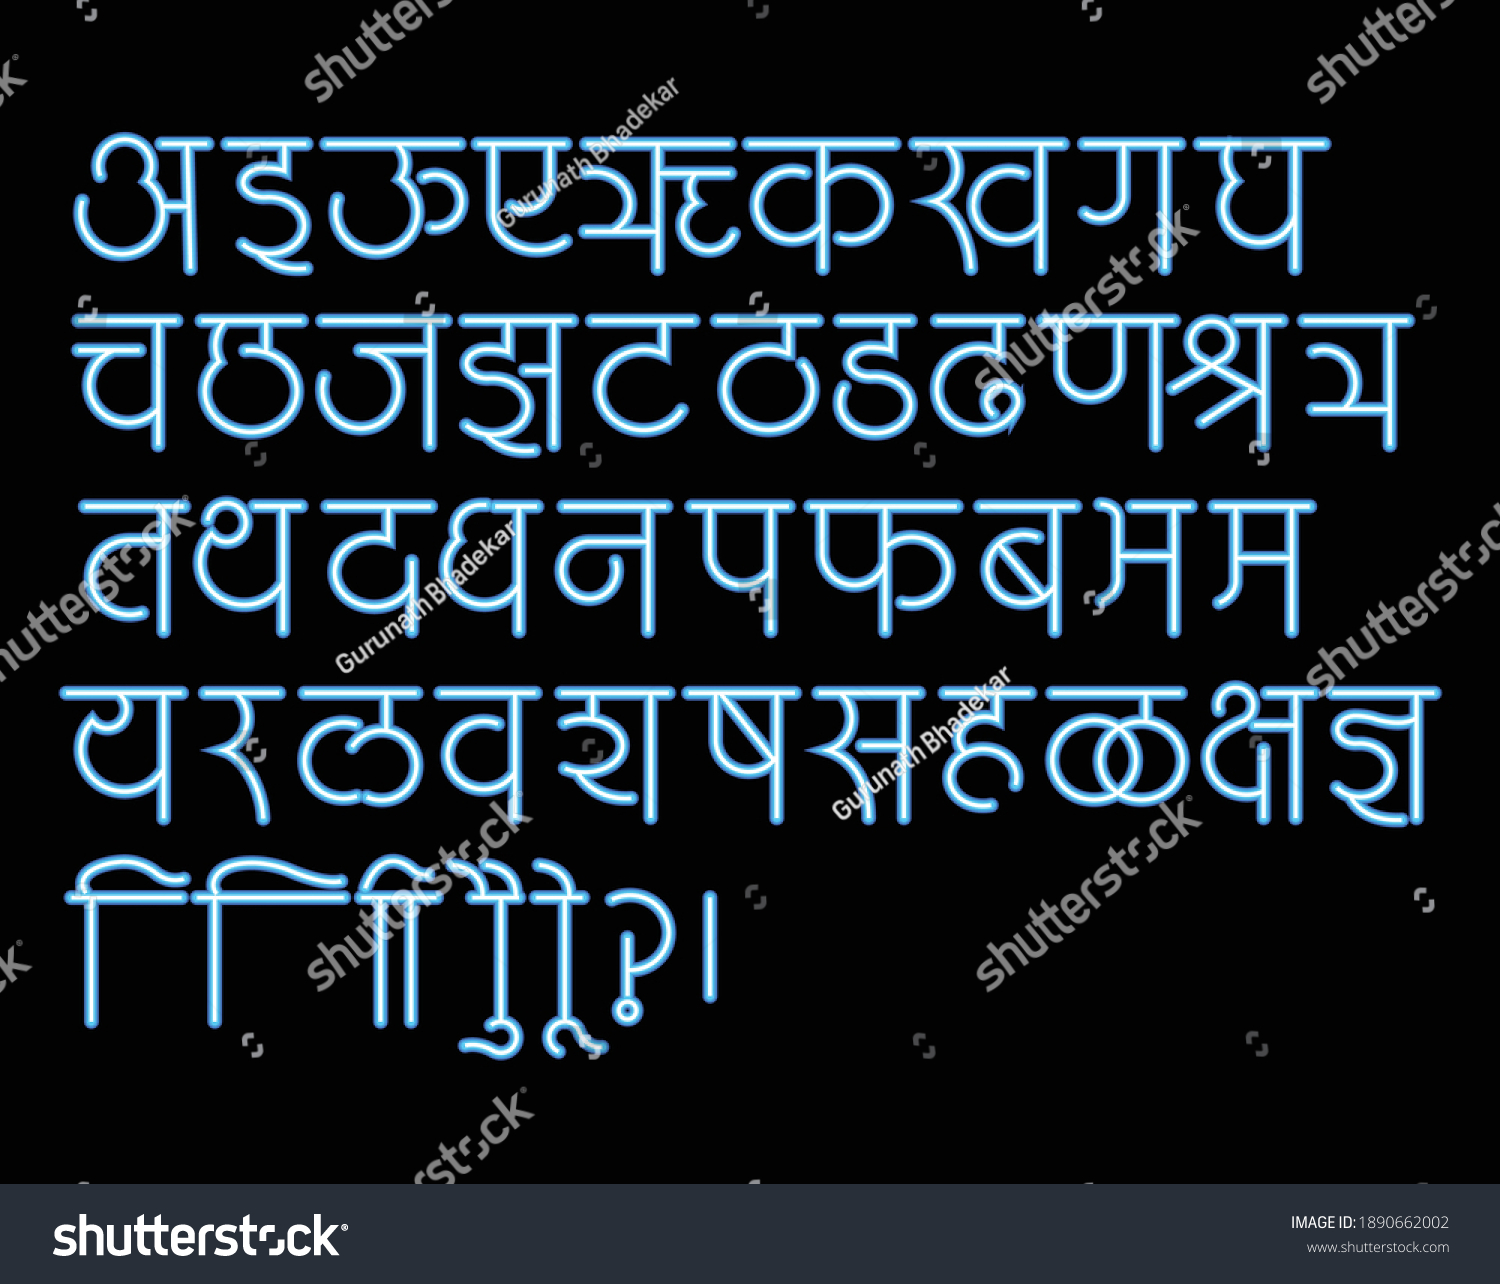 SVG of Handmade Devanagari alphabets Indian languages Hindi, Sanskrit, and Marathi. neon font or typeface svg